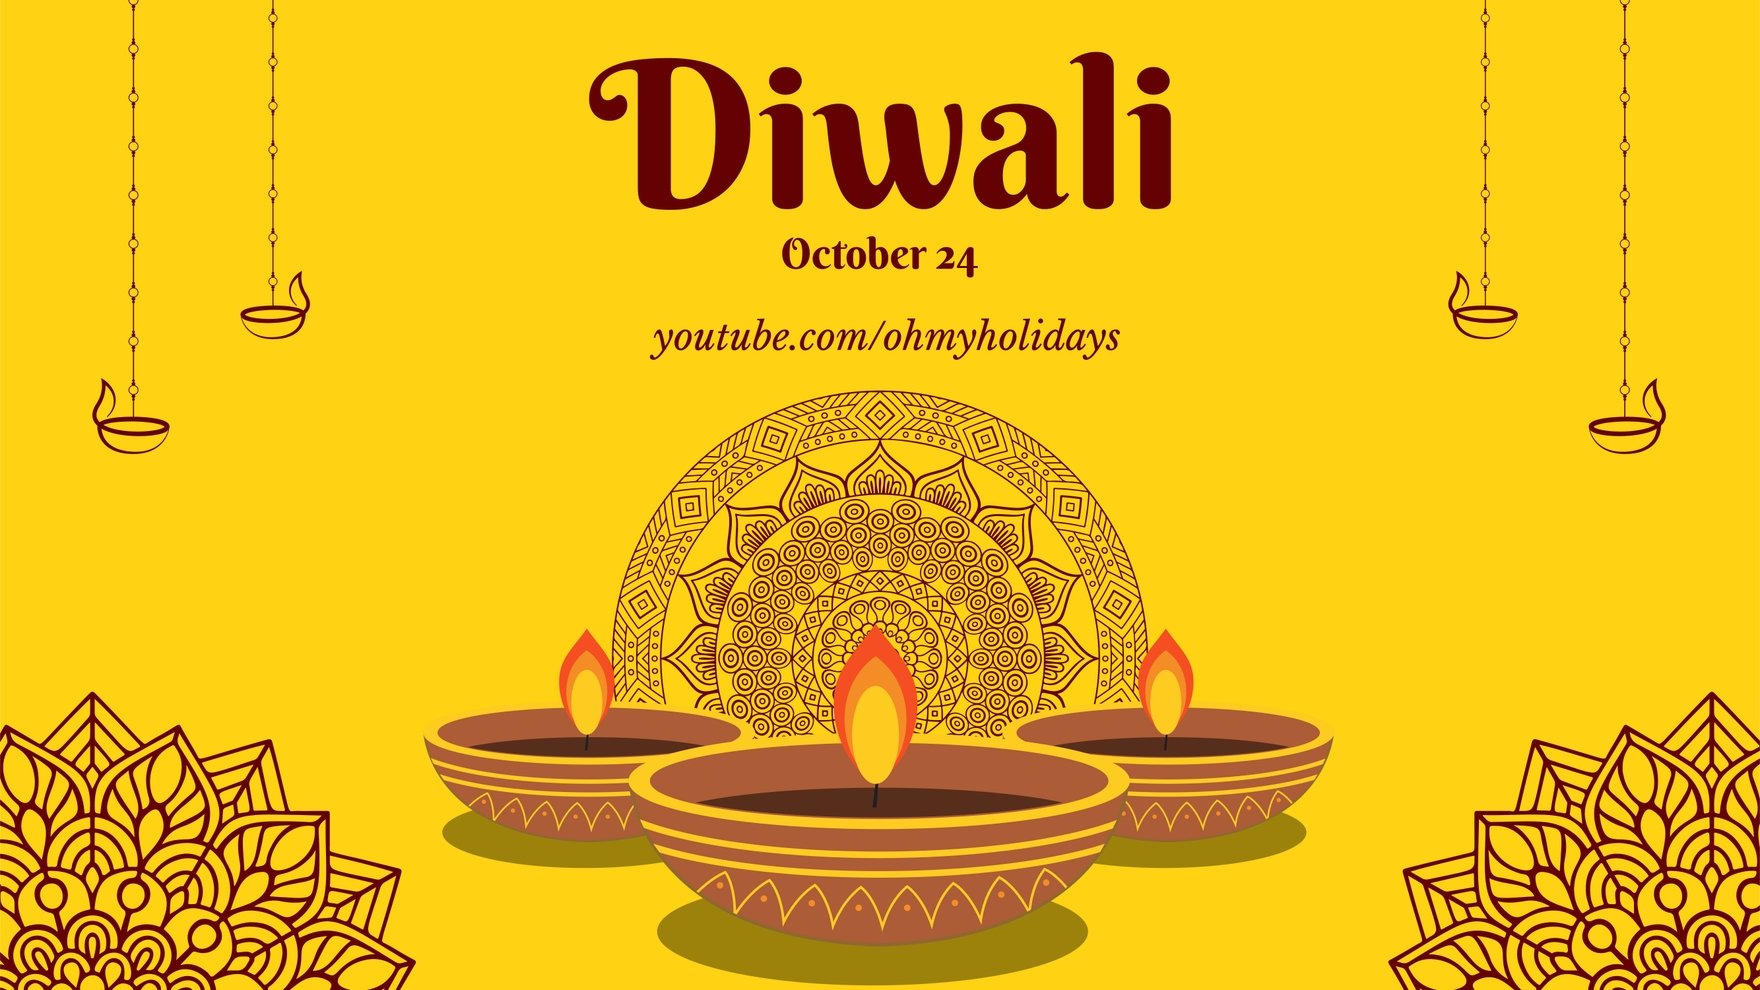 Free Diwali Youtube Banner in Illustrator, PSD, EPS, SVG, JPG, PNG